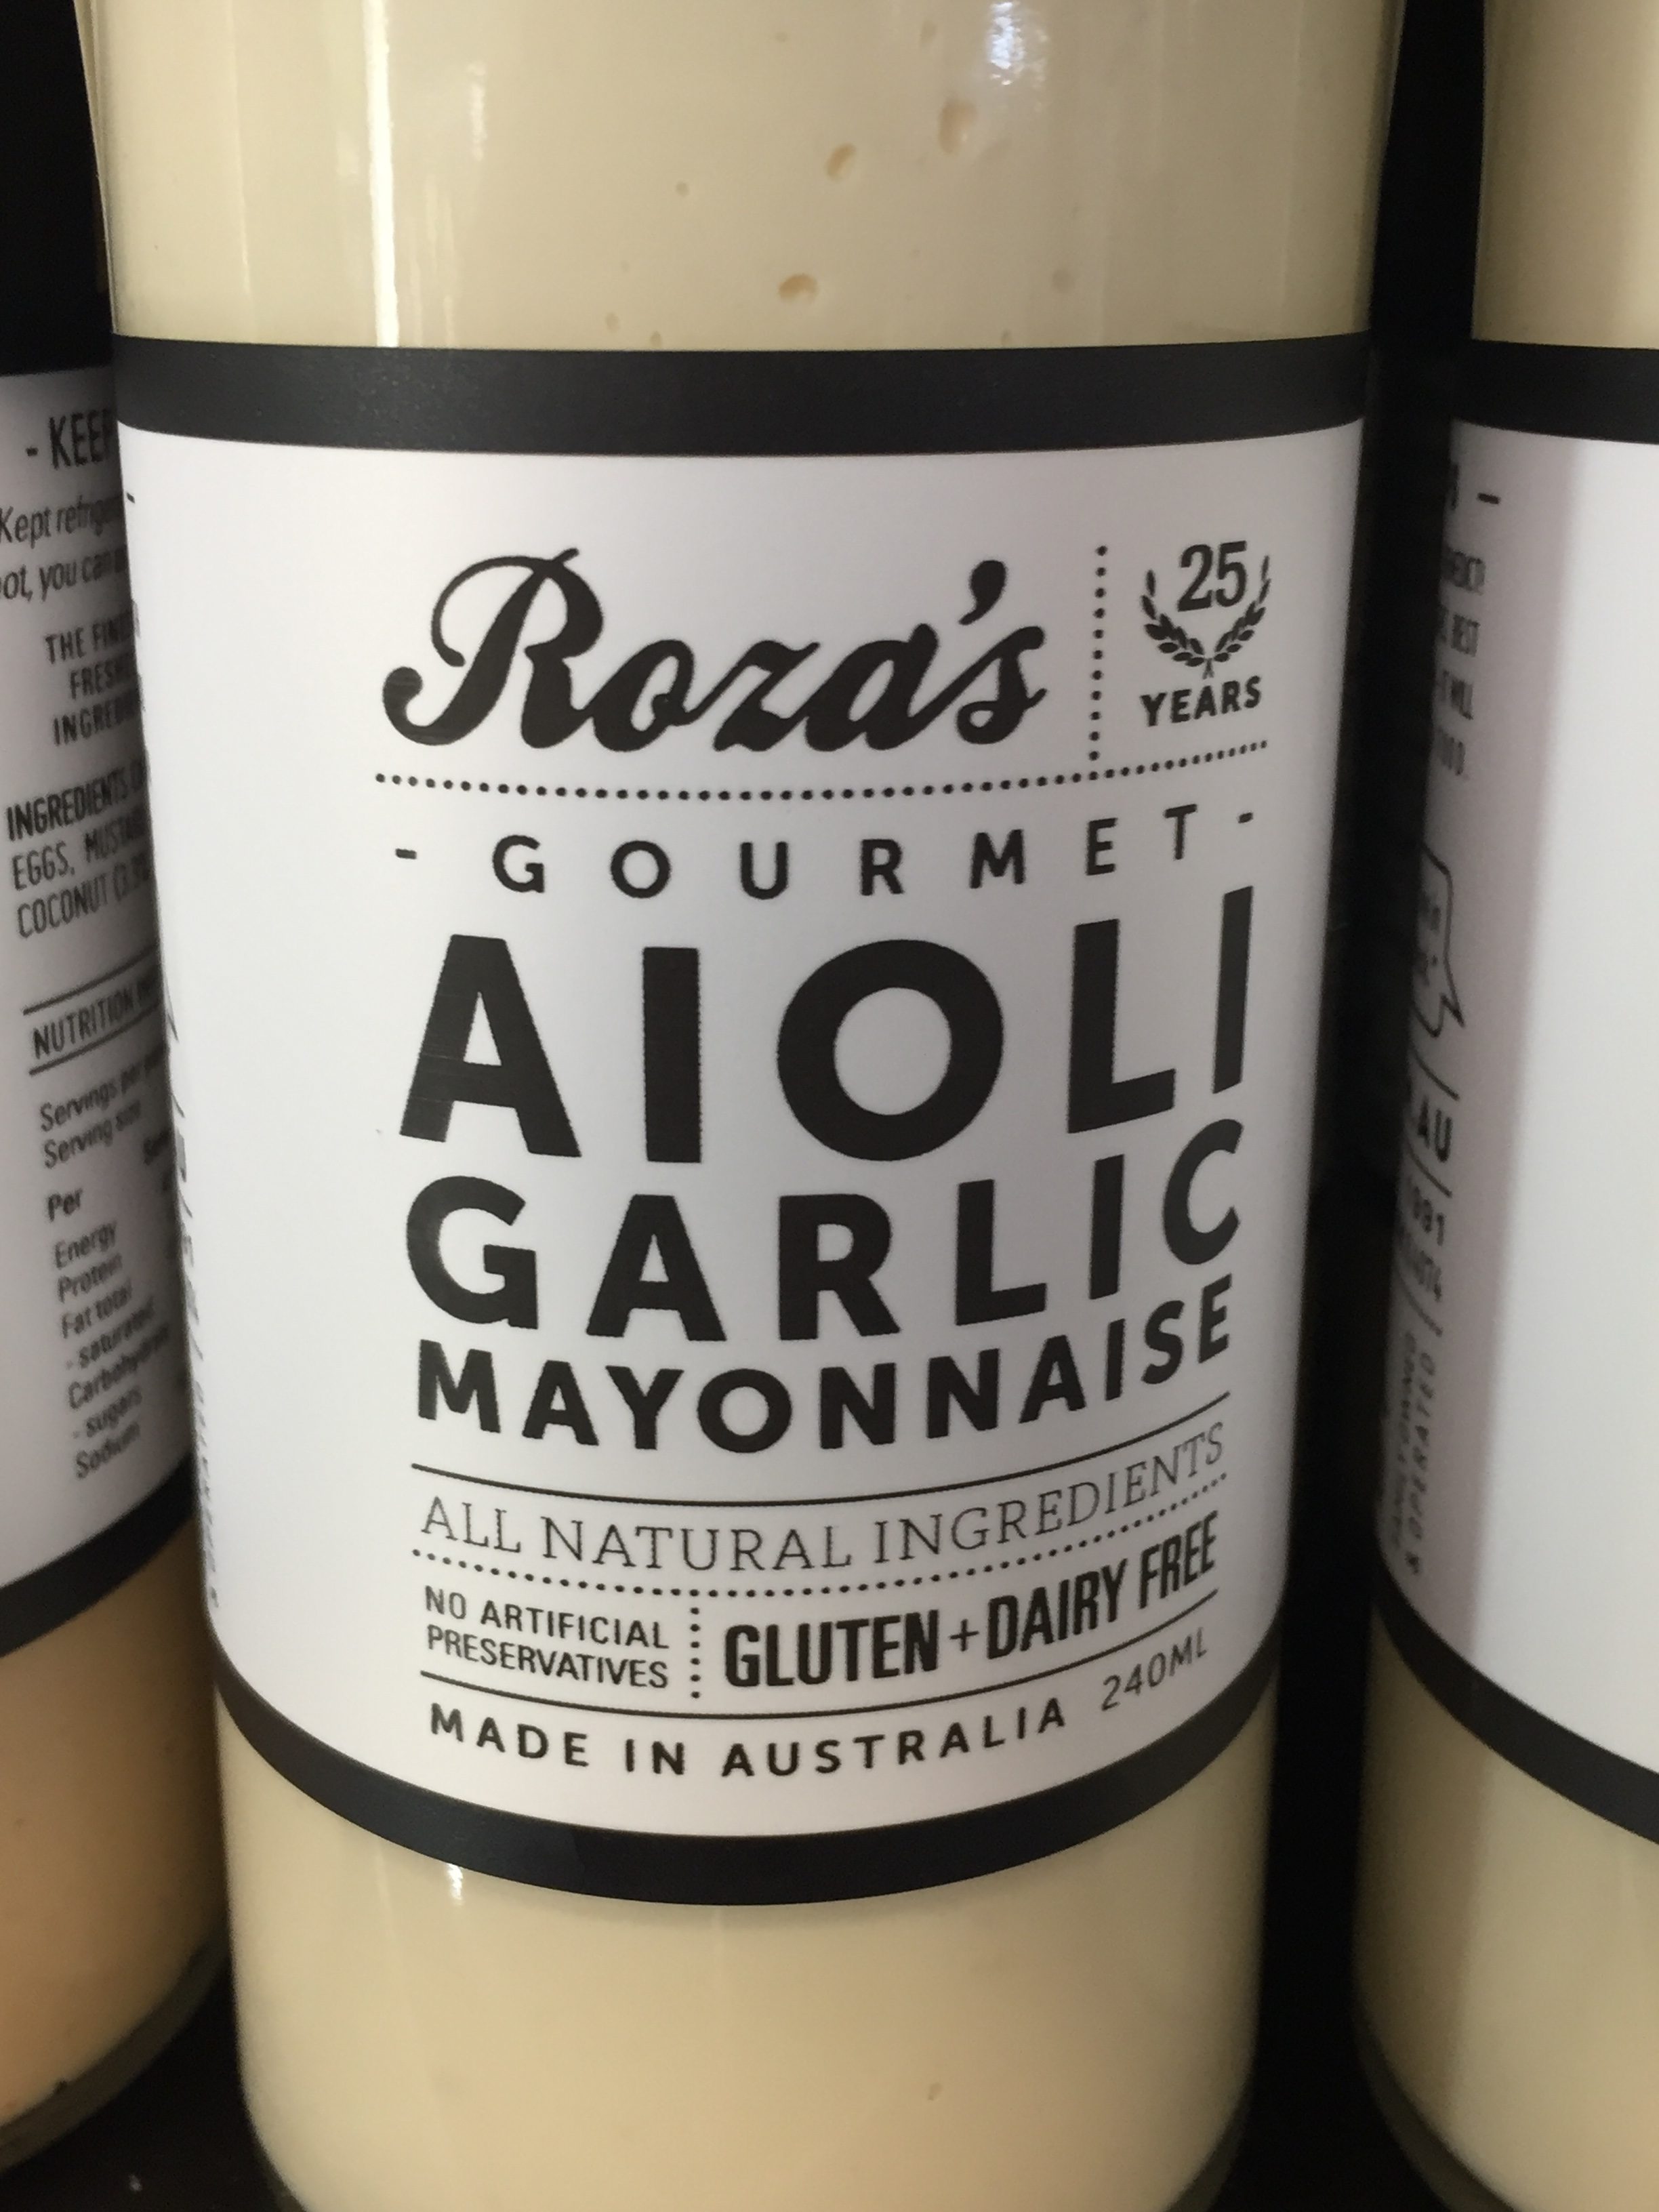 A Mayonnaise And Aioli Based Sauce